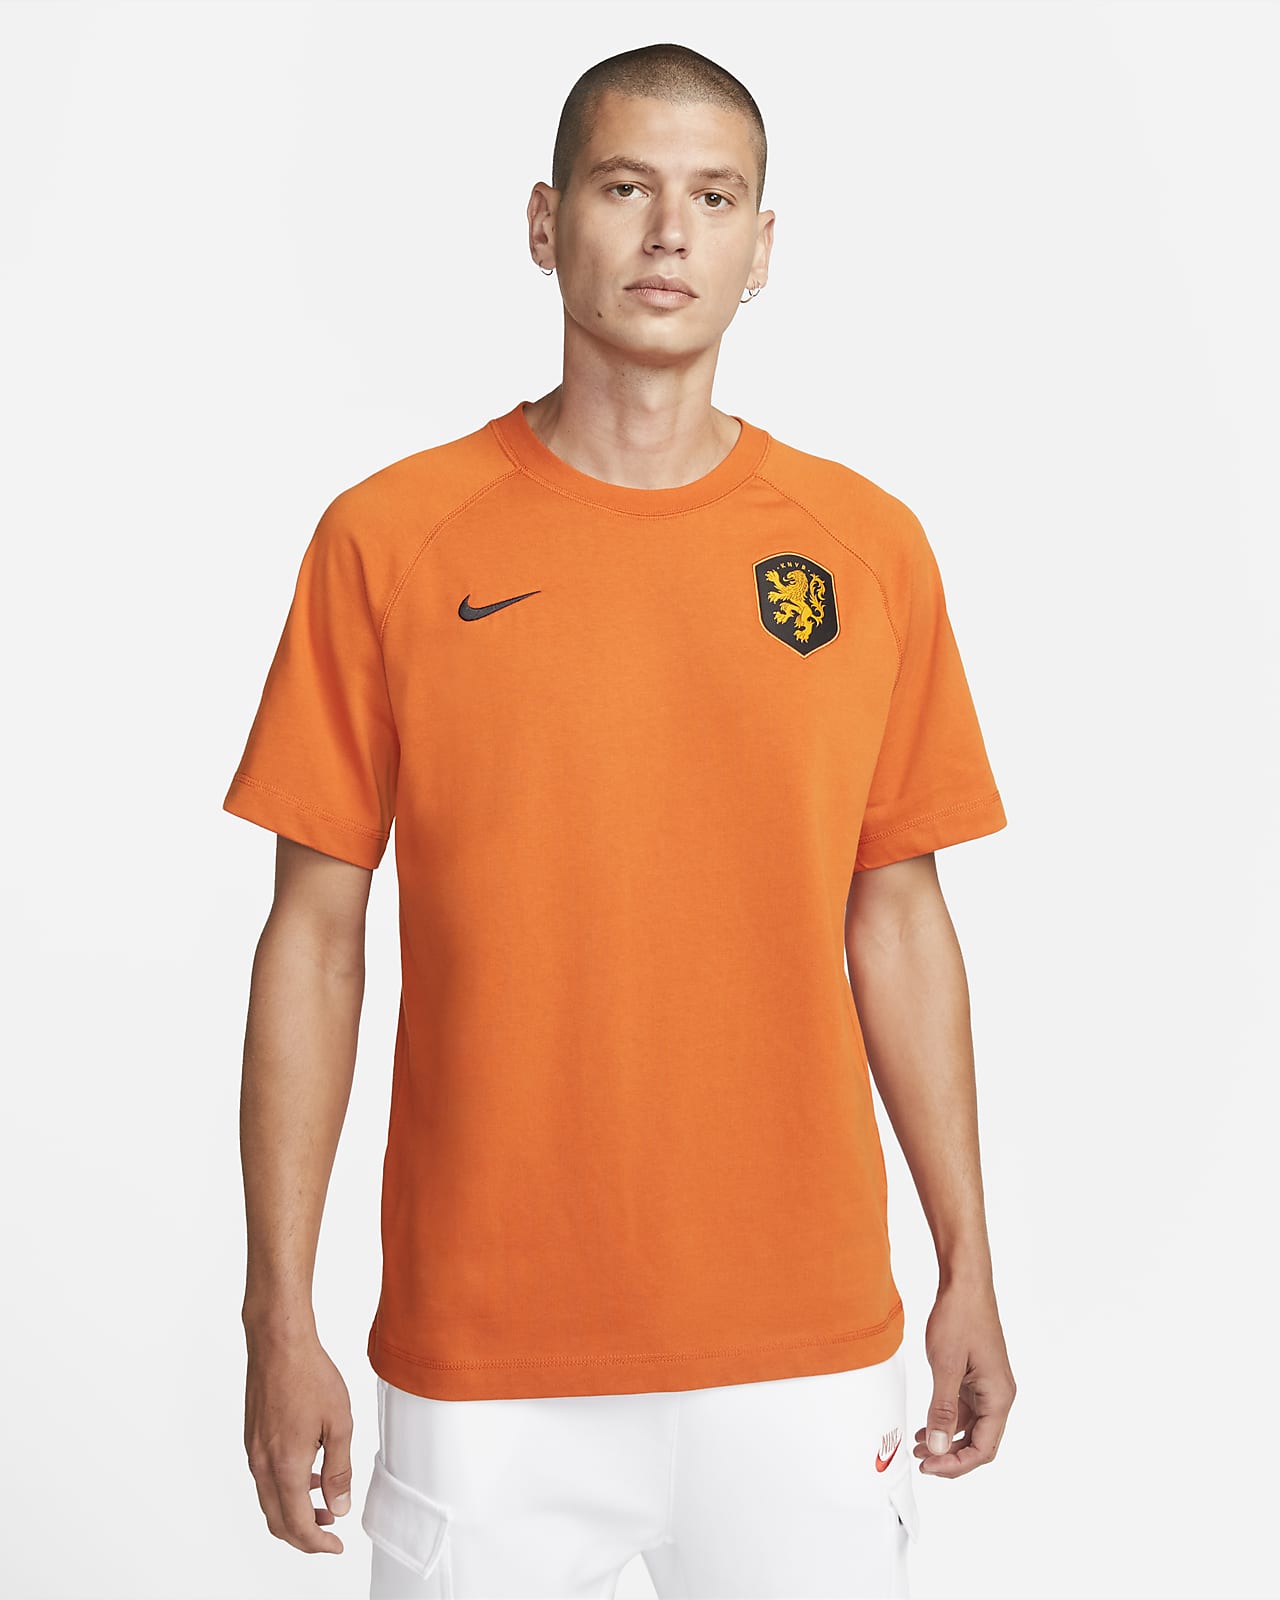 Netherlands Men's Nike Soccer Top